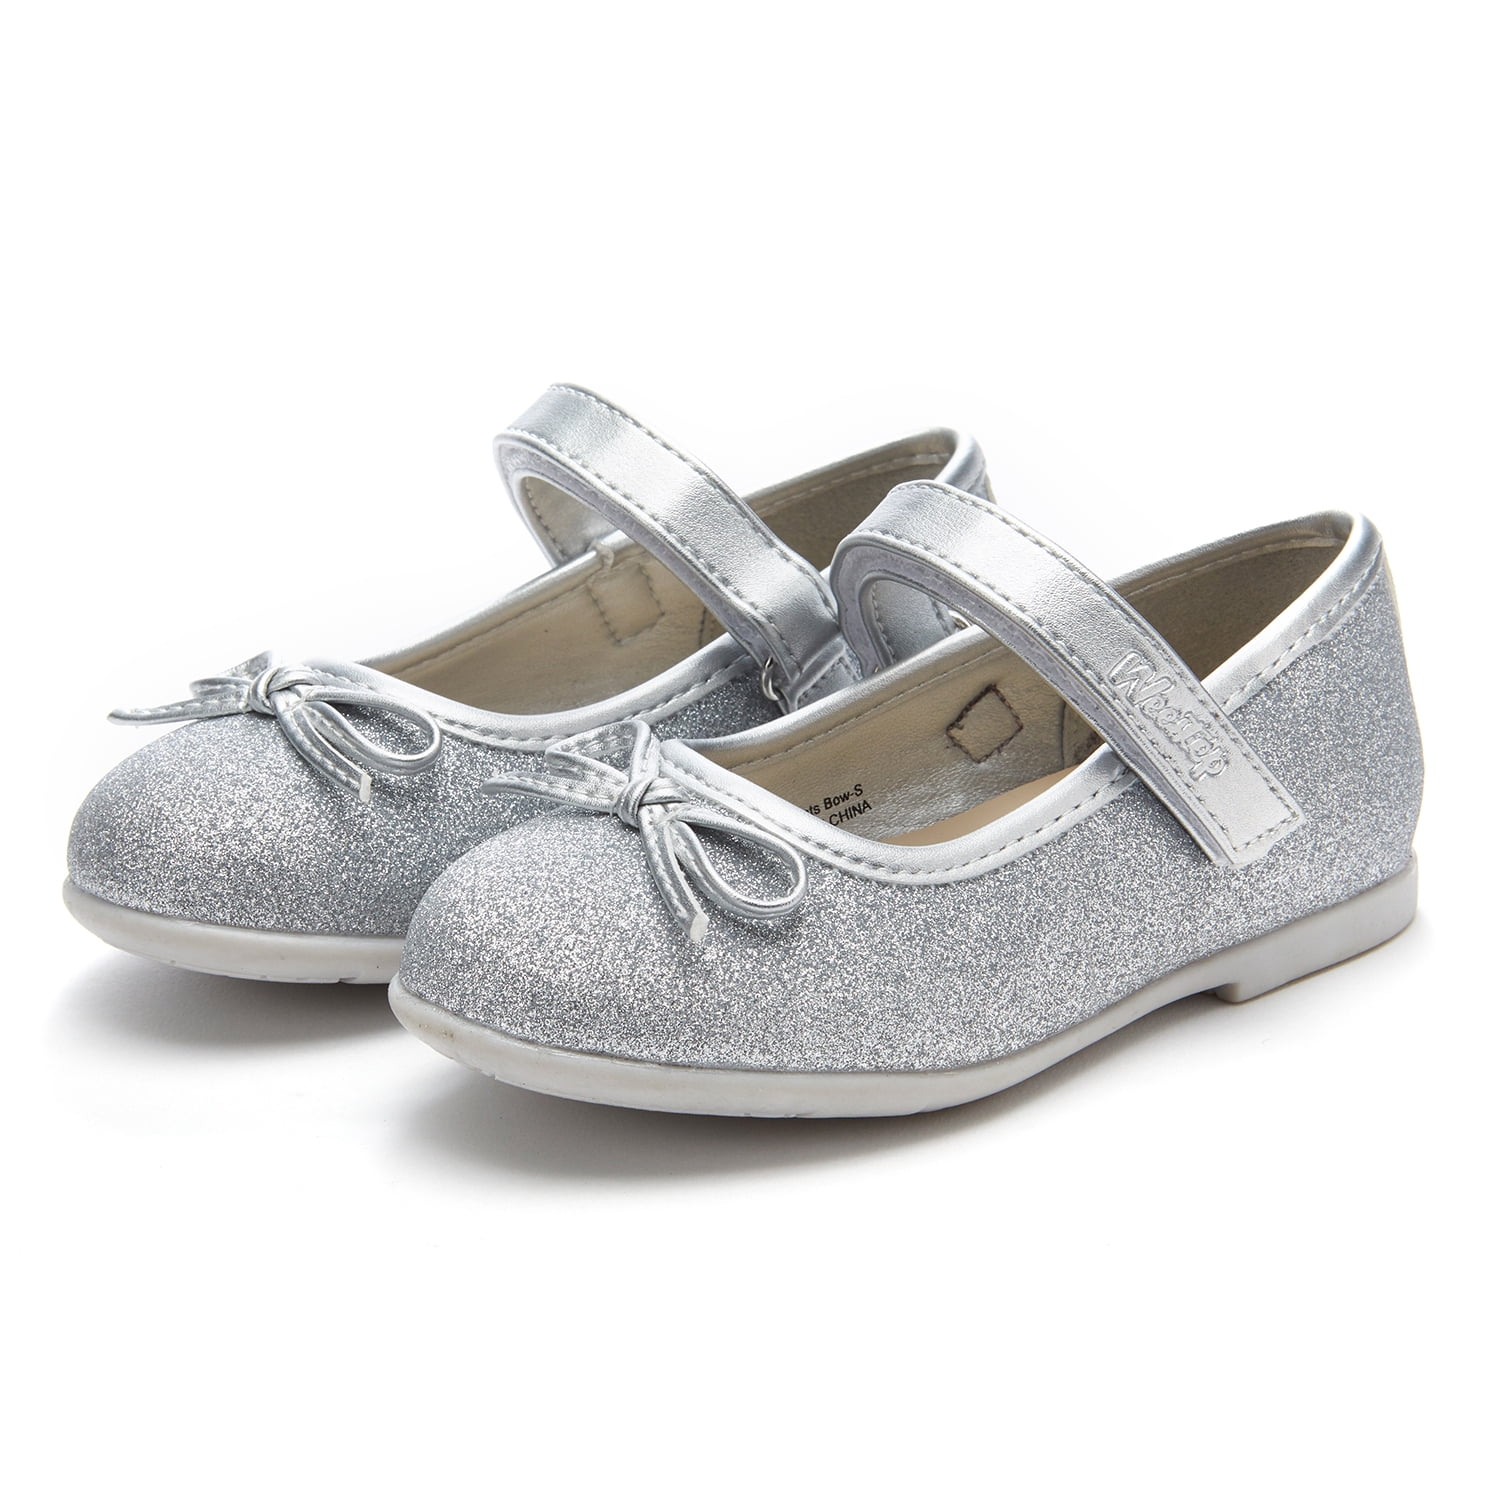 Kids Infant Toddler Girl/'s Rhinestone Mary Jane Strap Ballet Flat Shoes Size US